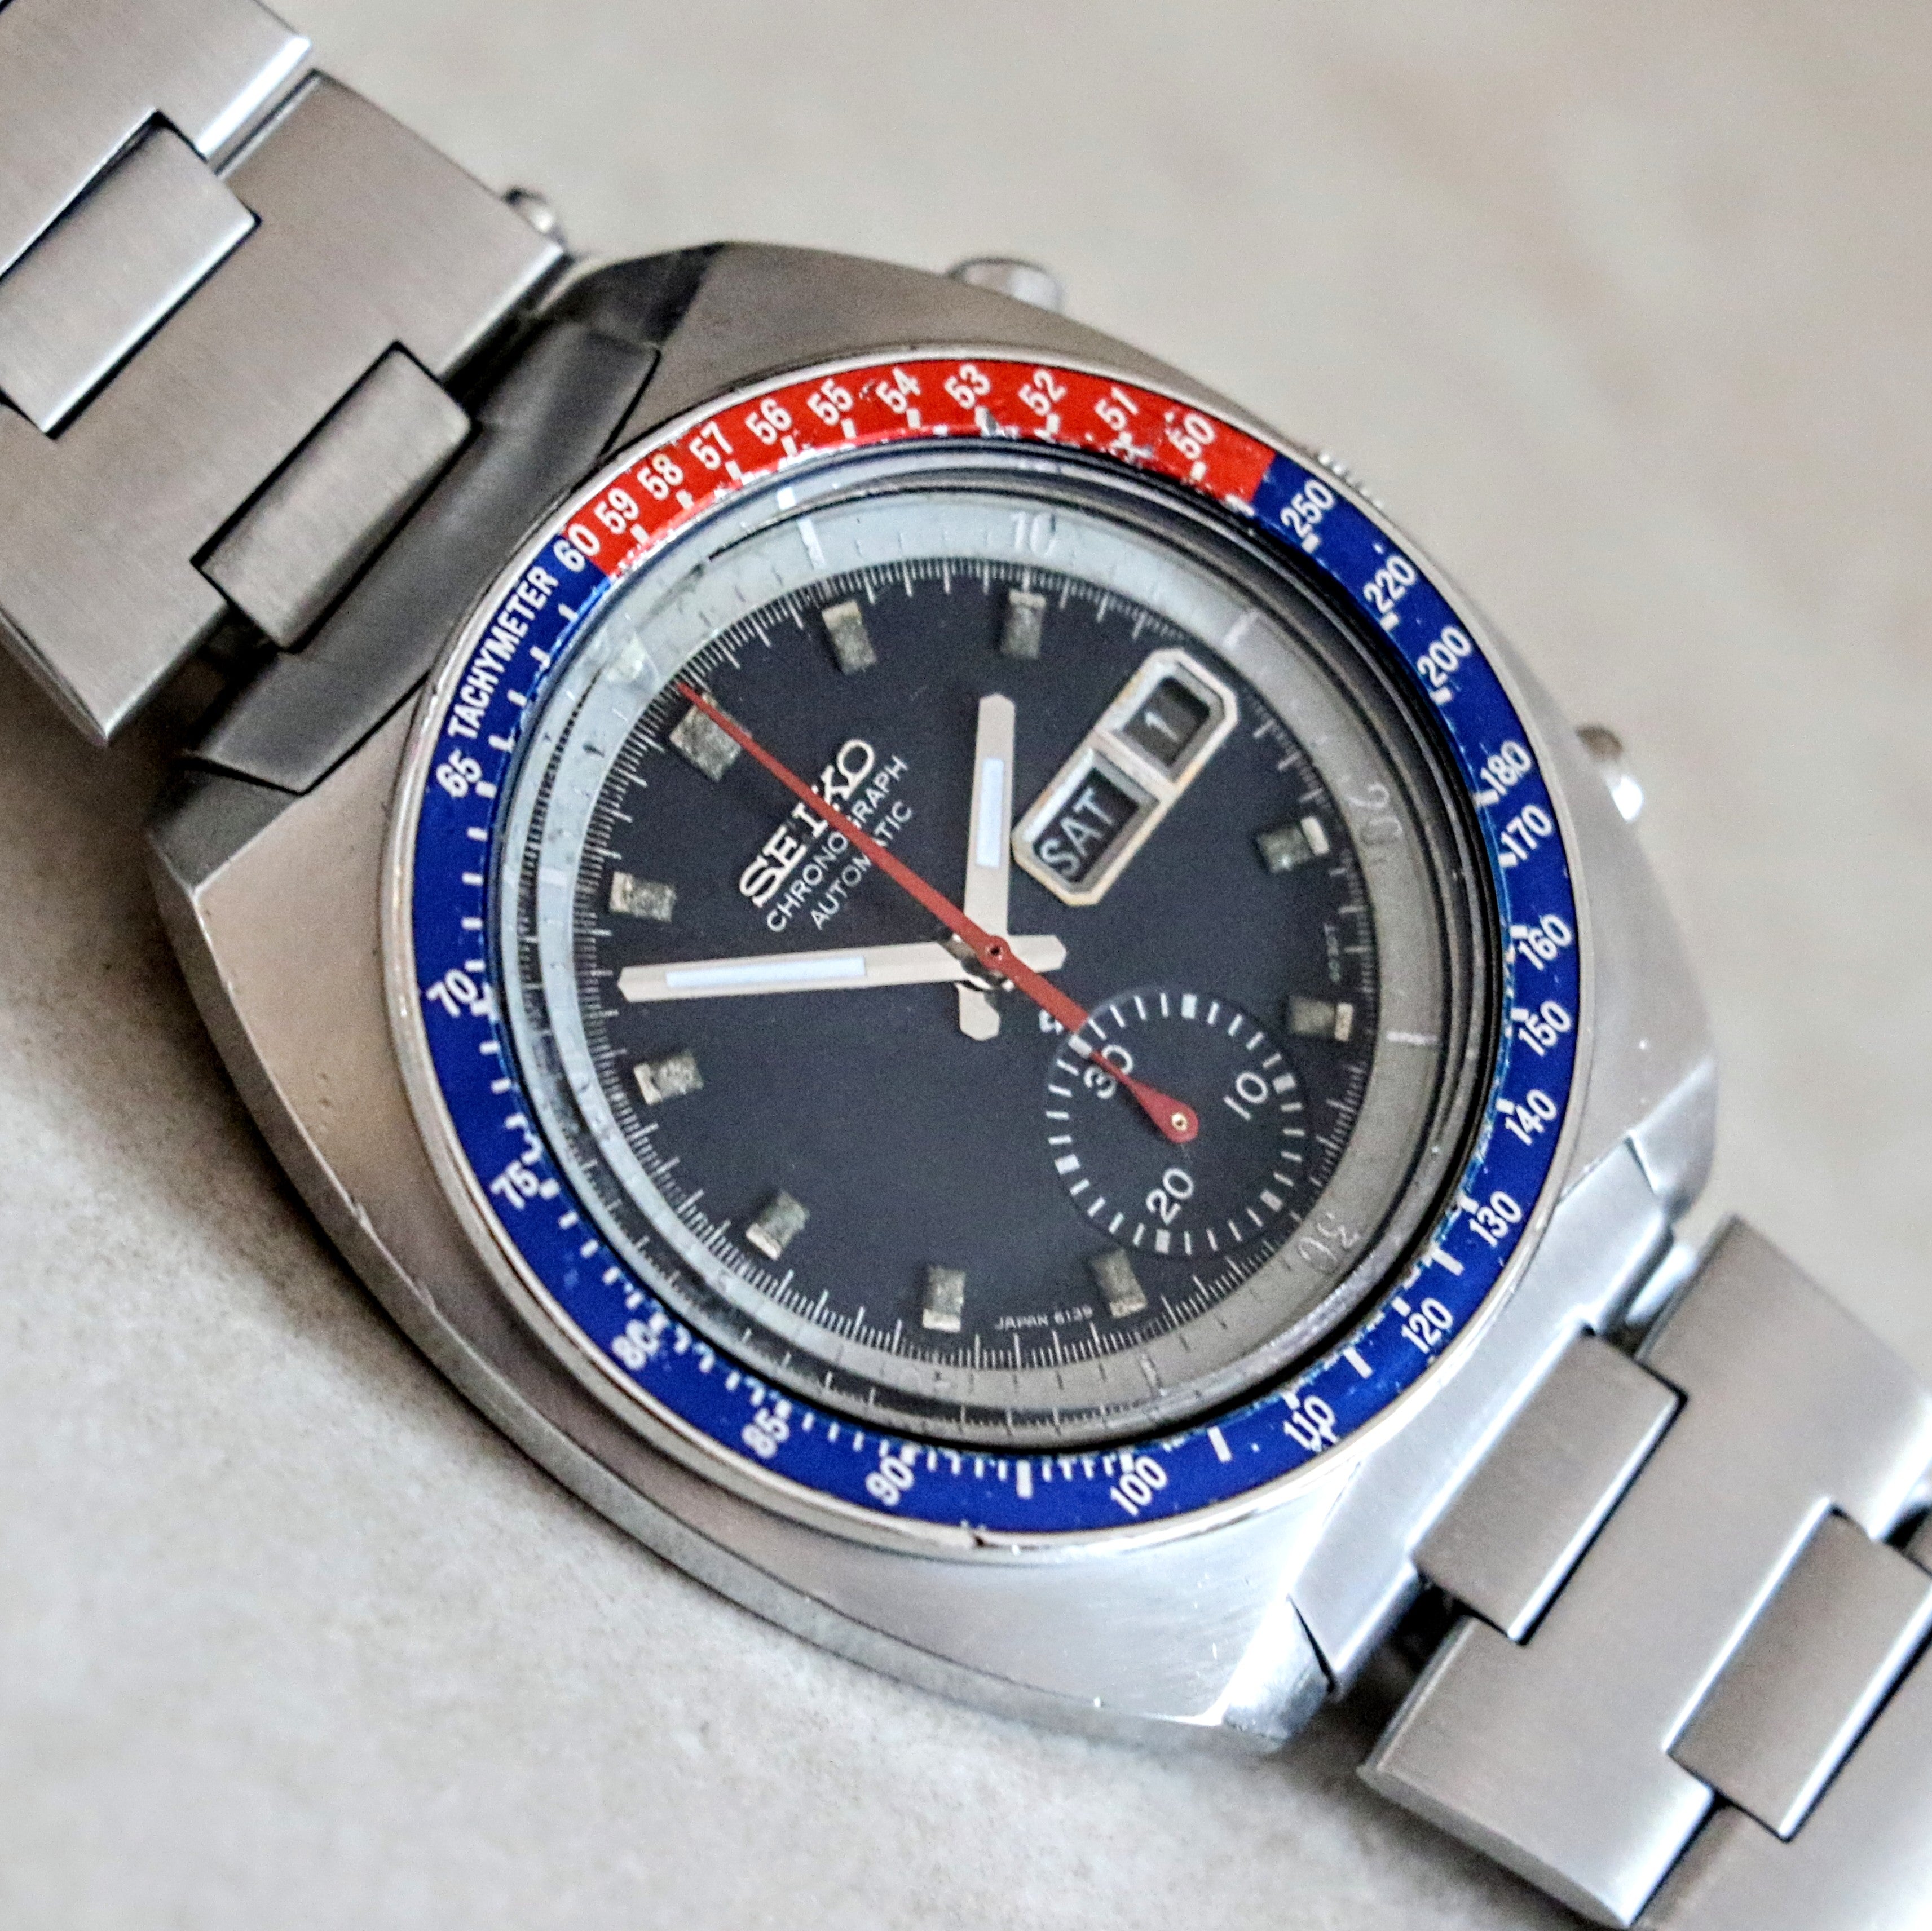 1975 SEIKO Pogue Chronograph Automatic Watch Ref. 6139-6002 Black Dial Vintage Wristwatch